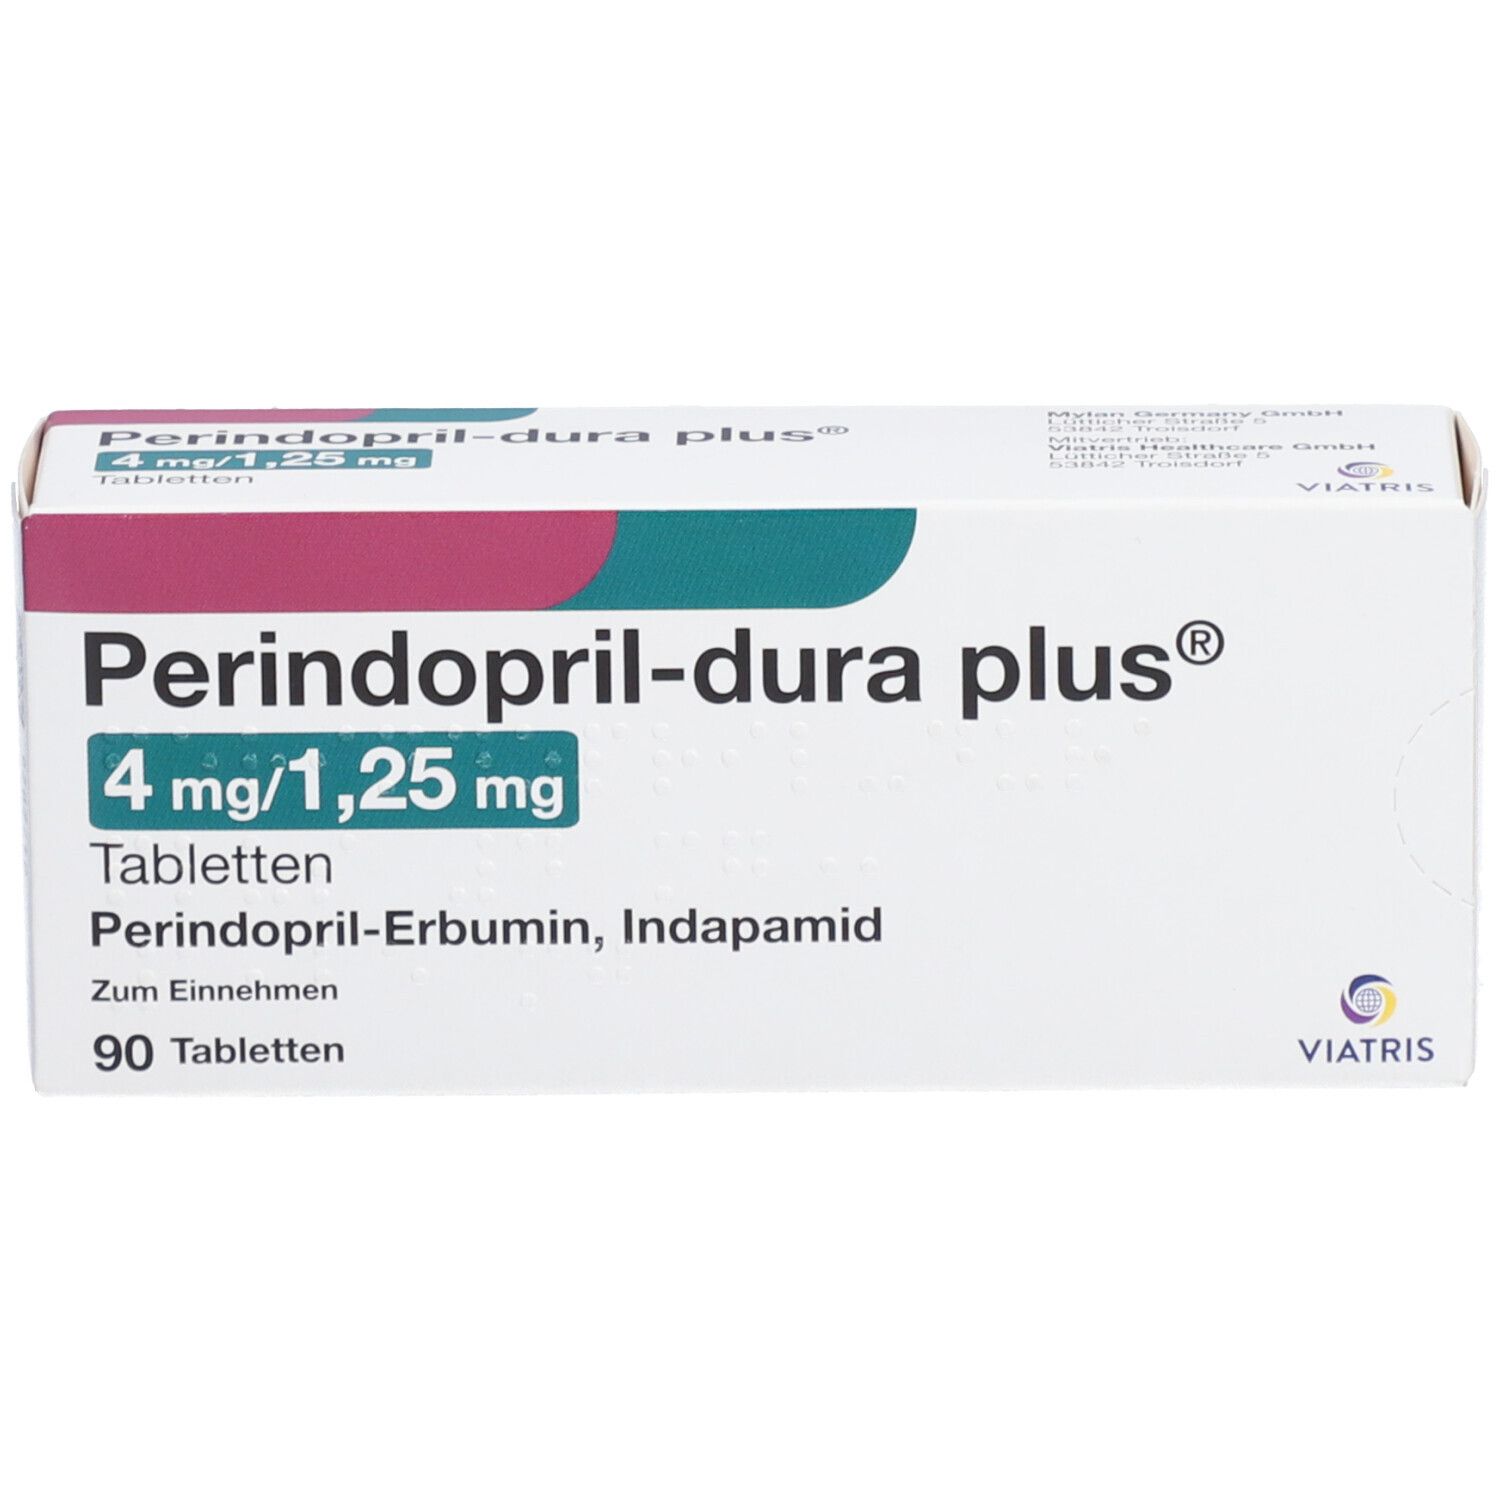 Perindopril-dura plus® 4 mg/1,25 mg